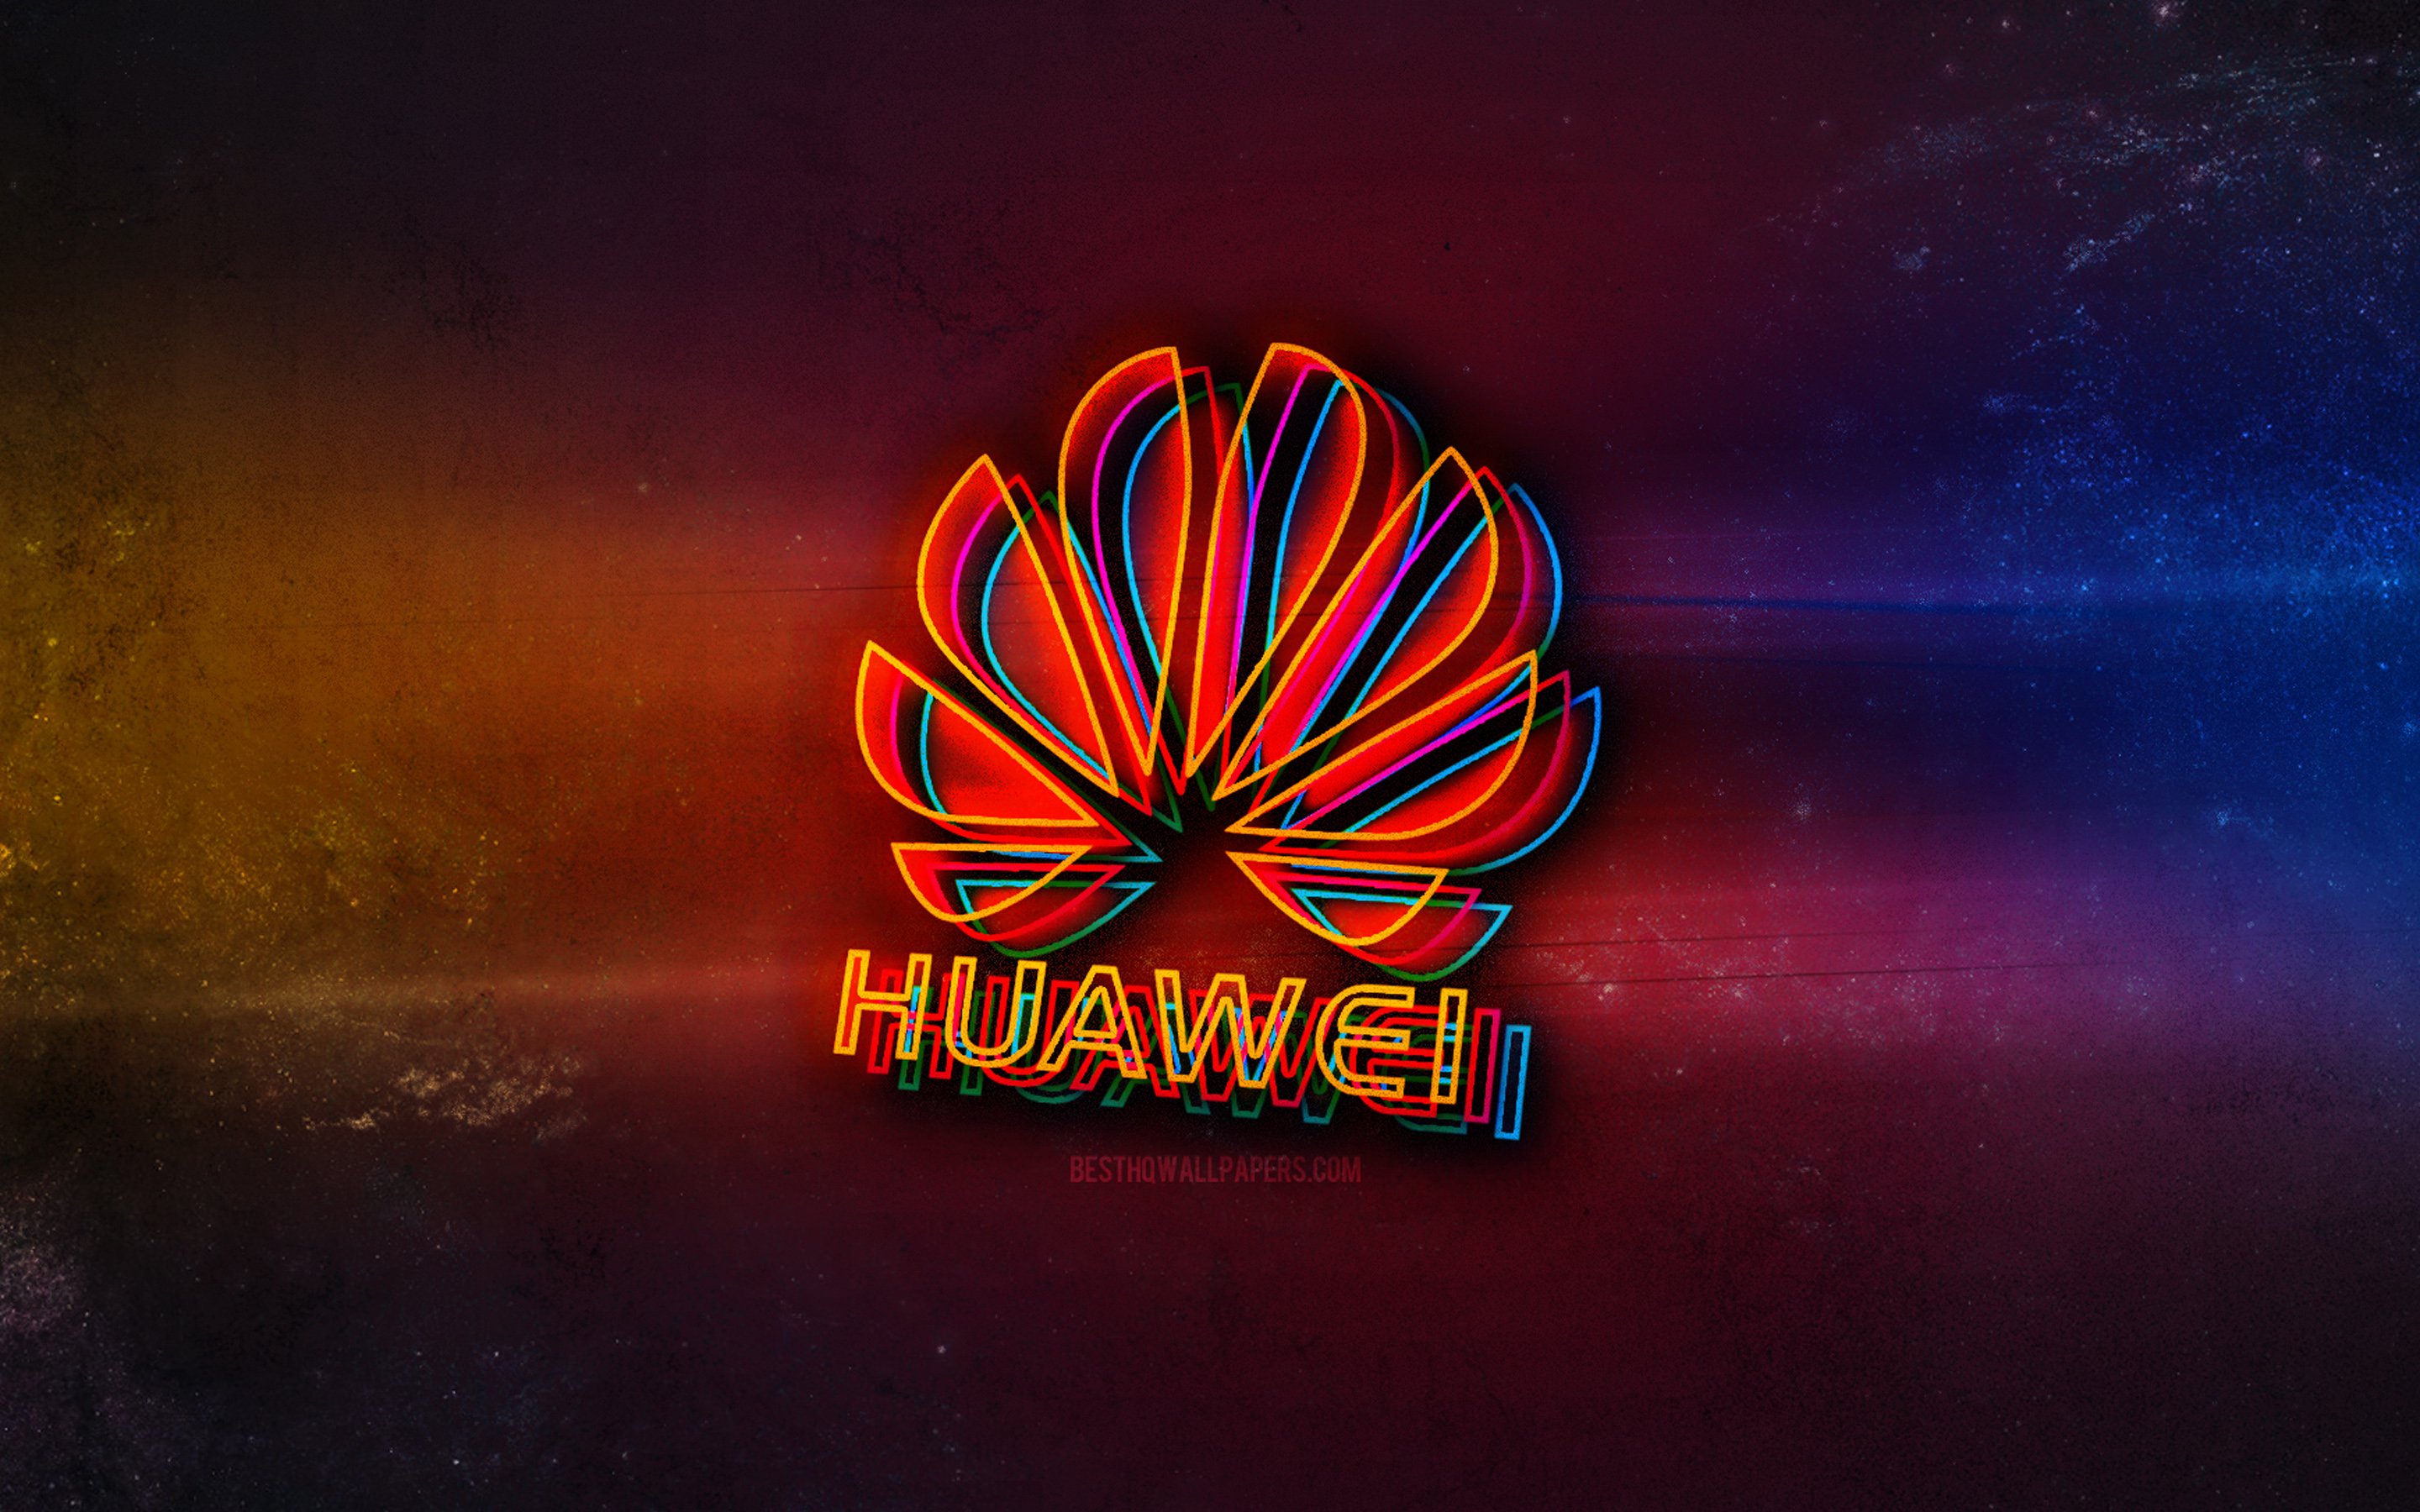 HUAWEI wallpaper | Huawei wallpapers, Iphone wallpaper for guys, Game  wallpaper iphone